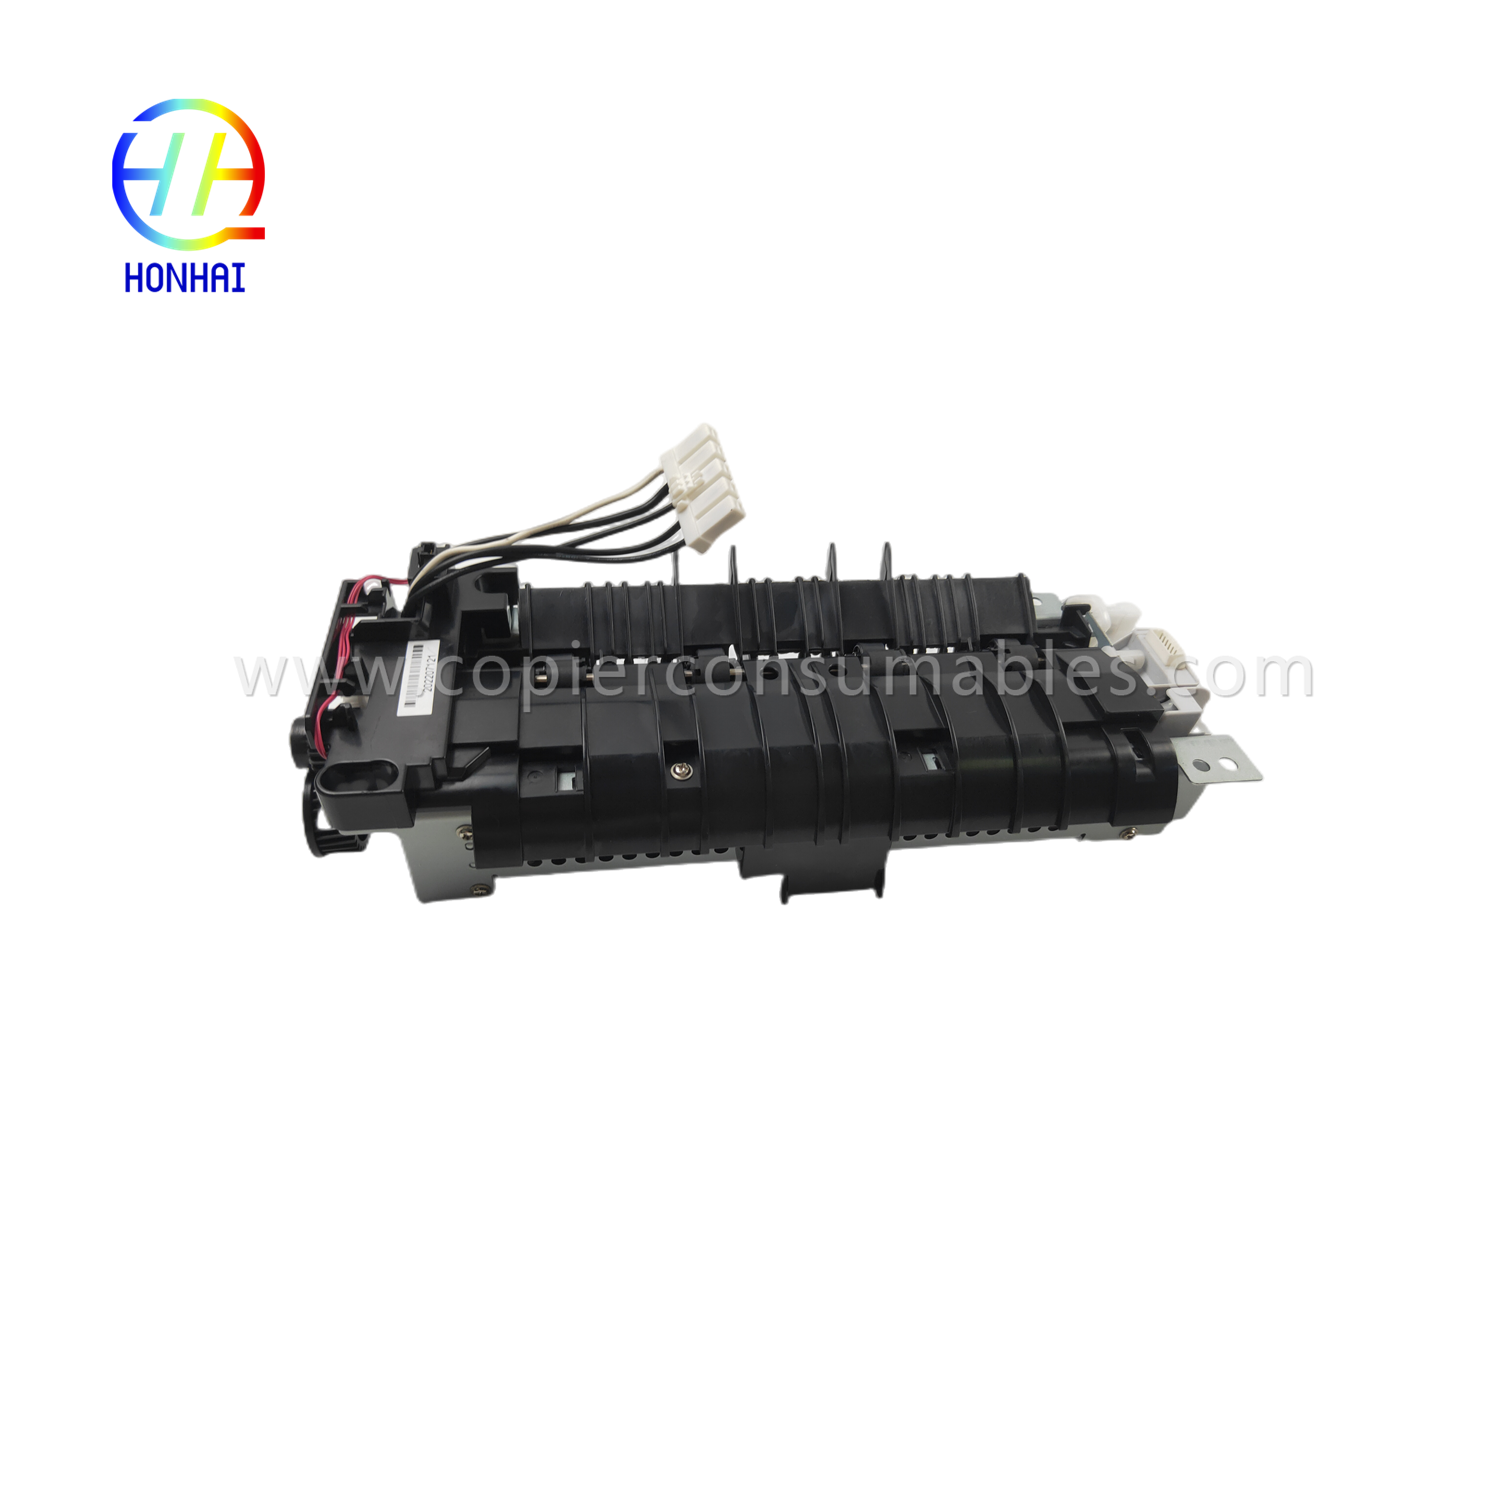 https://www.copierhonhaitech.com/fuser-assemble-220v-japan-for-hp-521-525-m 521